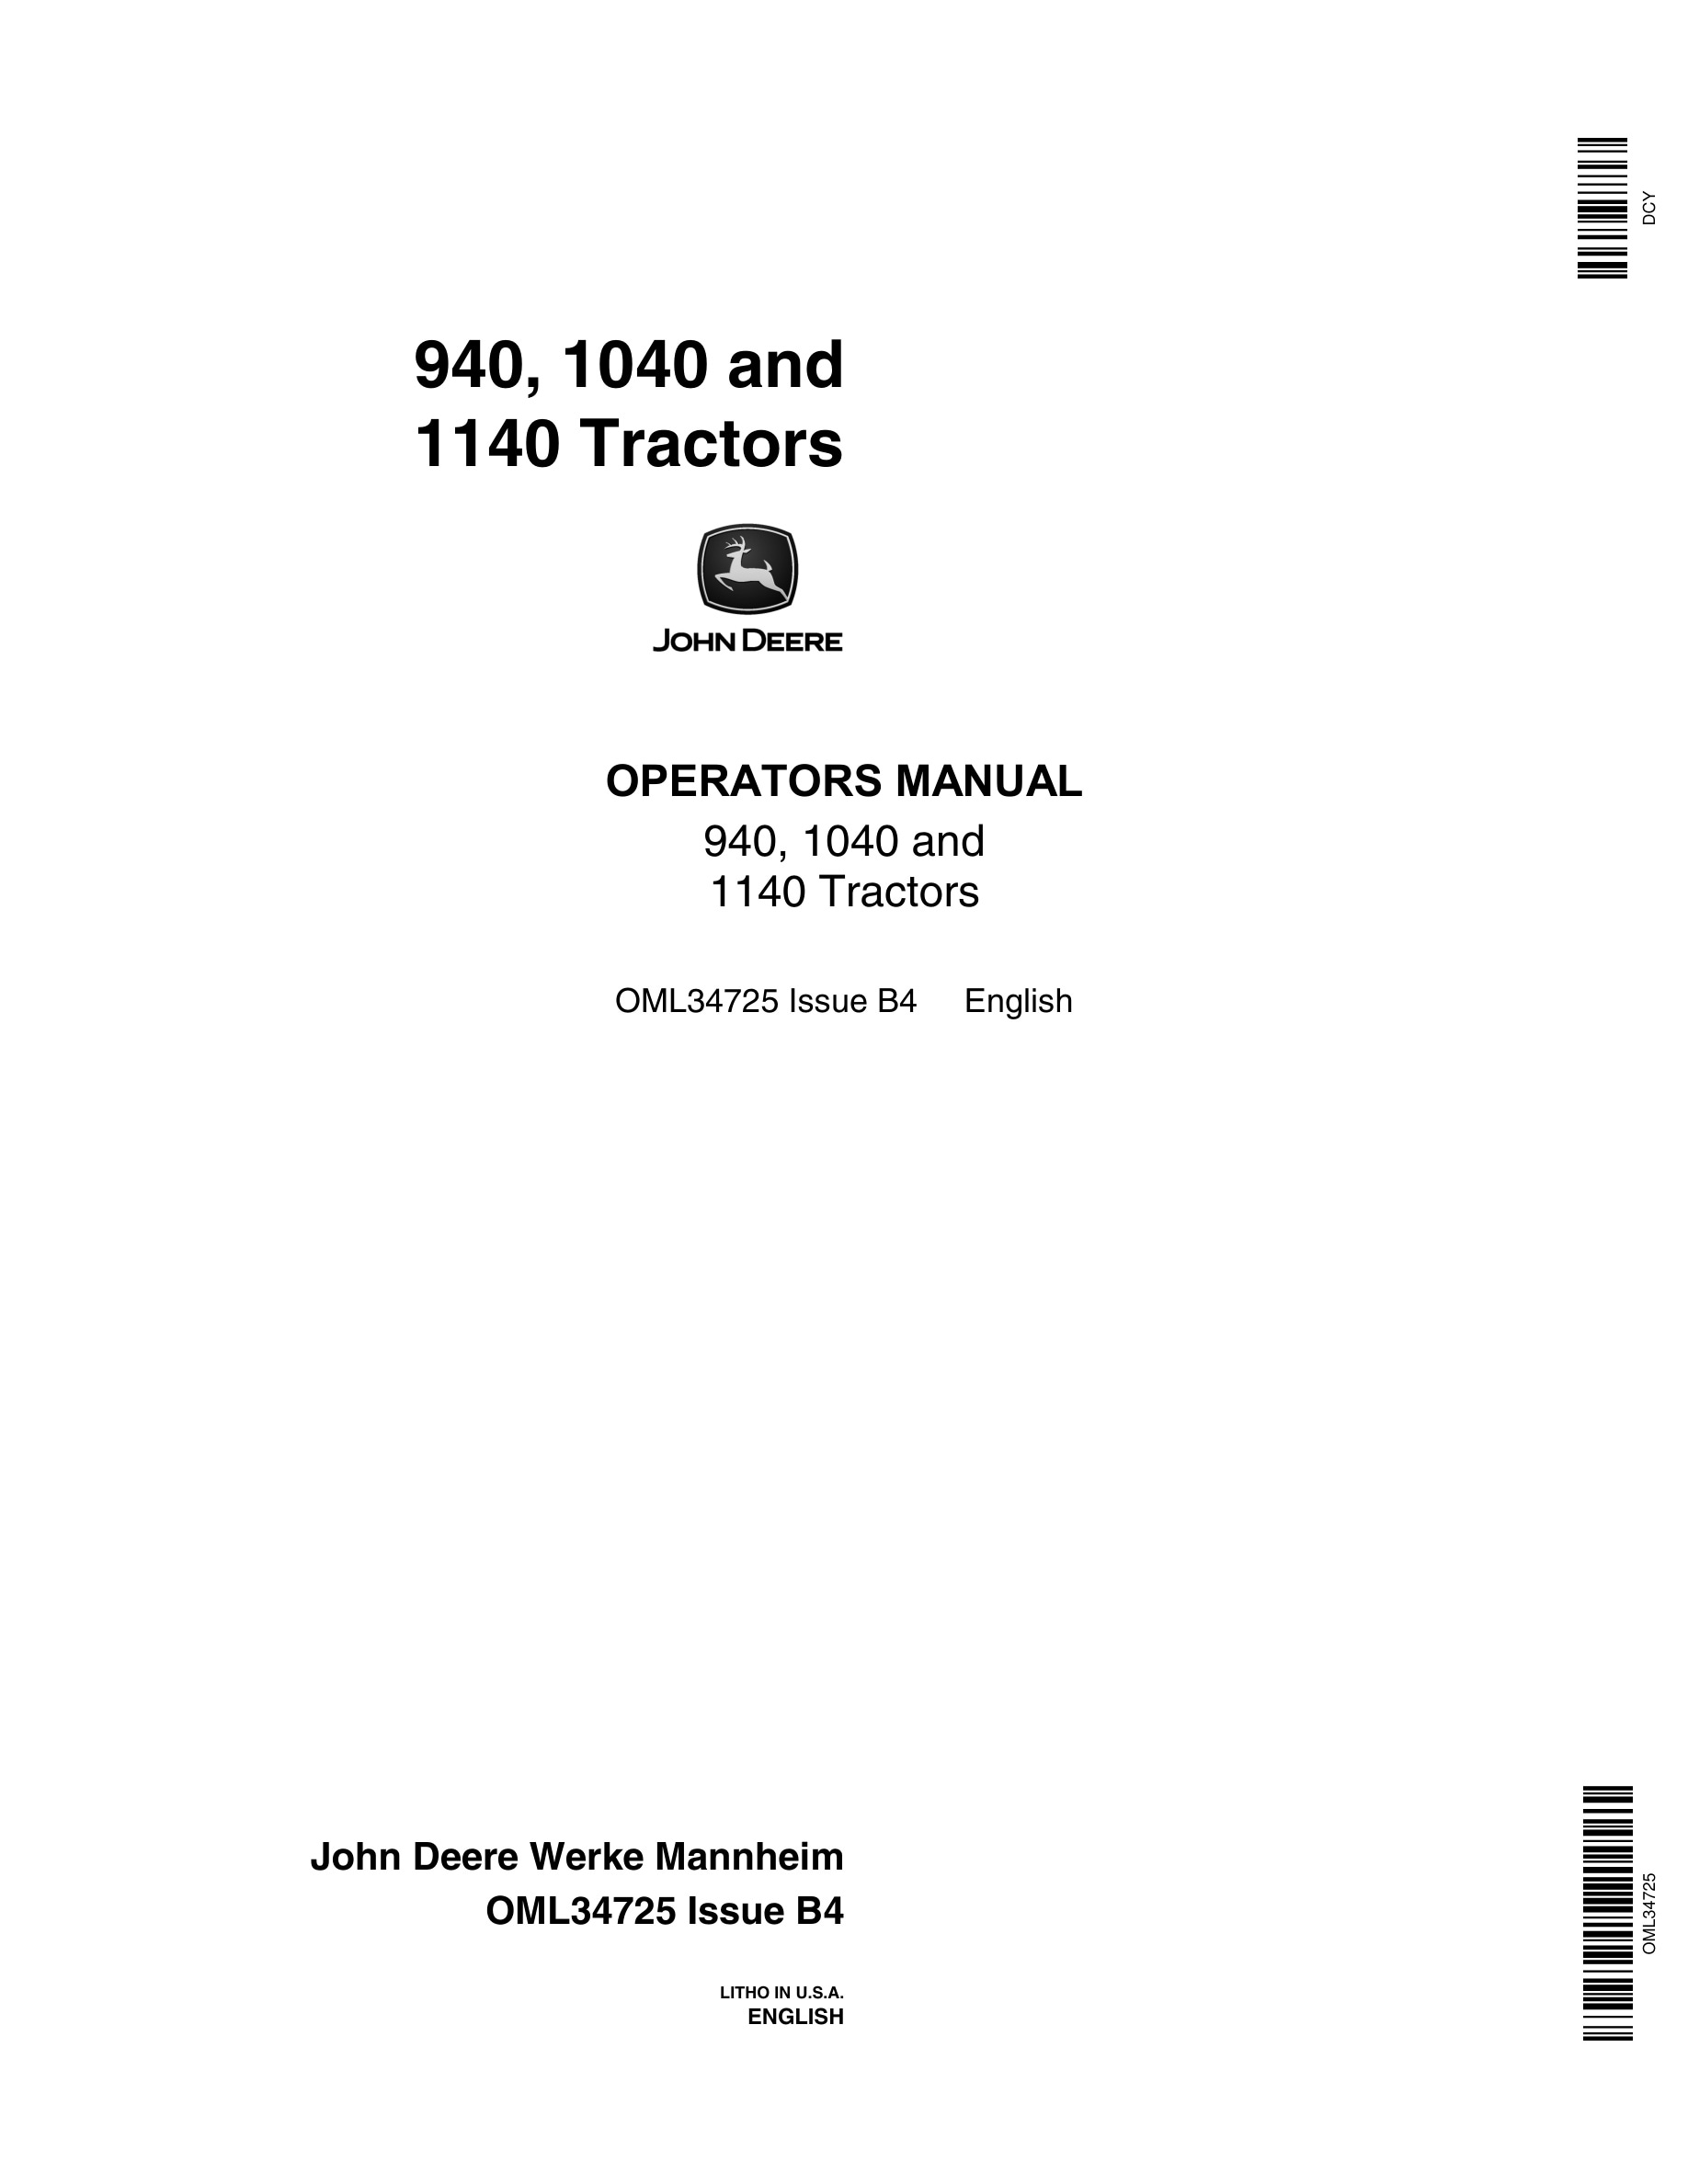 John Deere 940, 1040 and 1140 Tractor Operator Manual OML34725-1